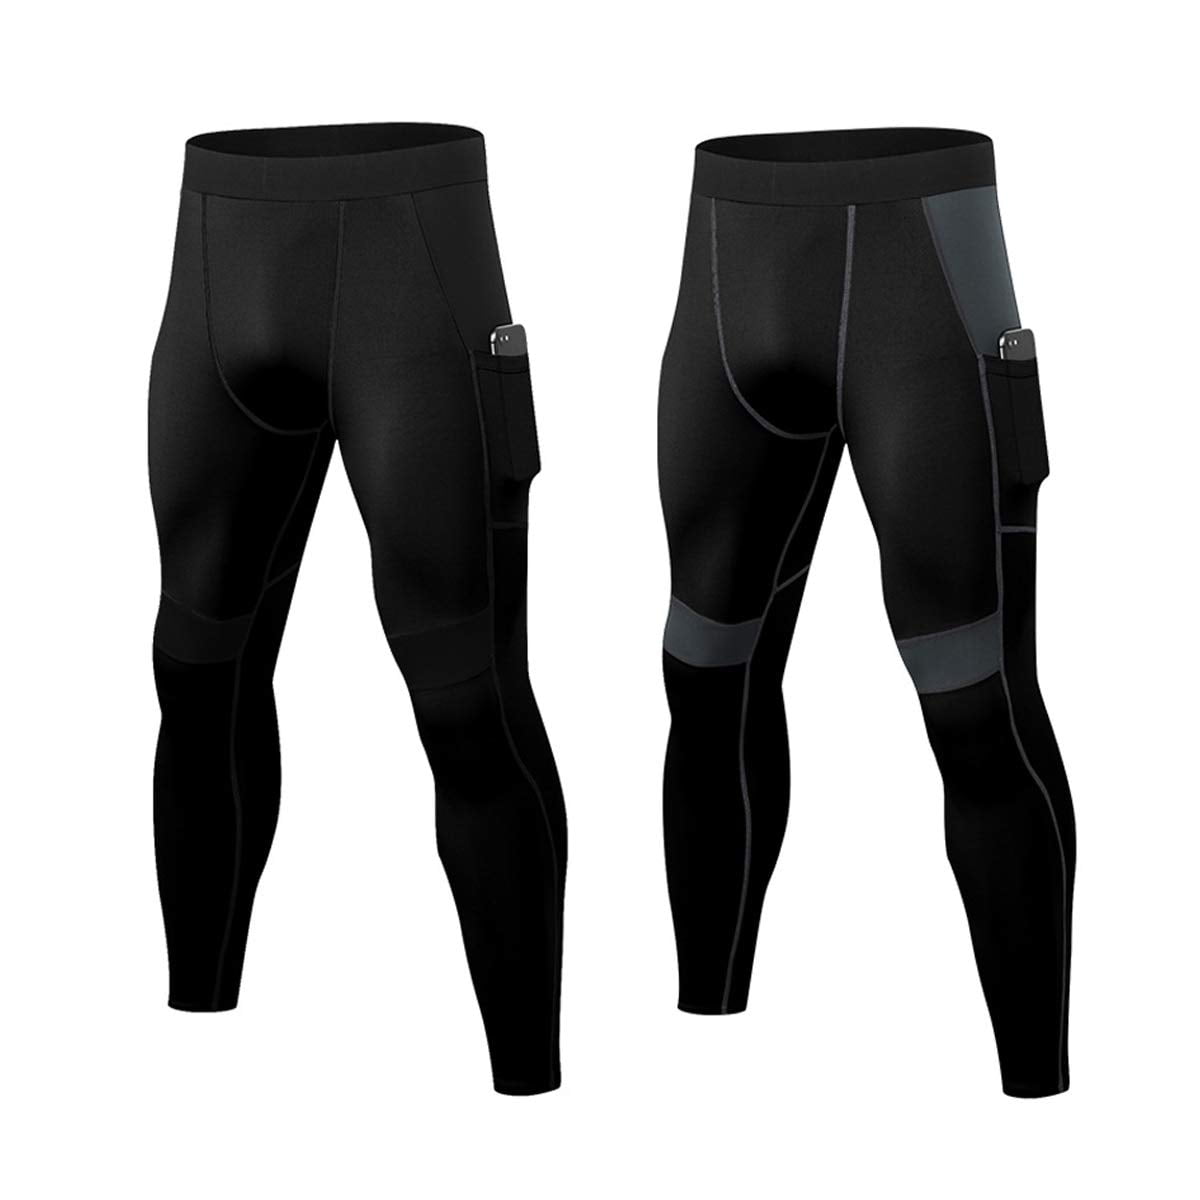 LANBAOSI 2 Pack Men's Compression Pants Workout Athletic Gym Leggings ...